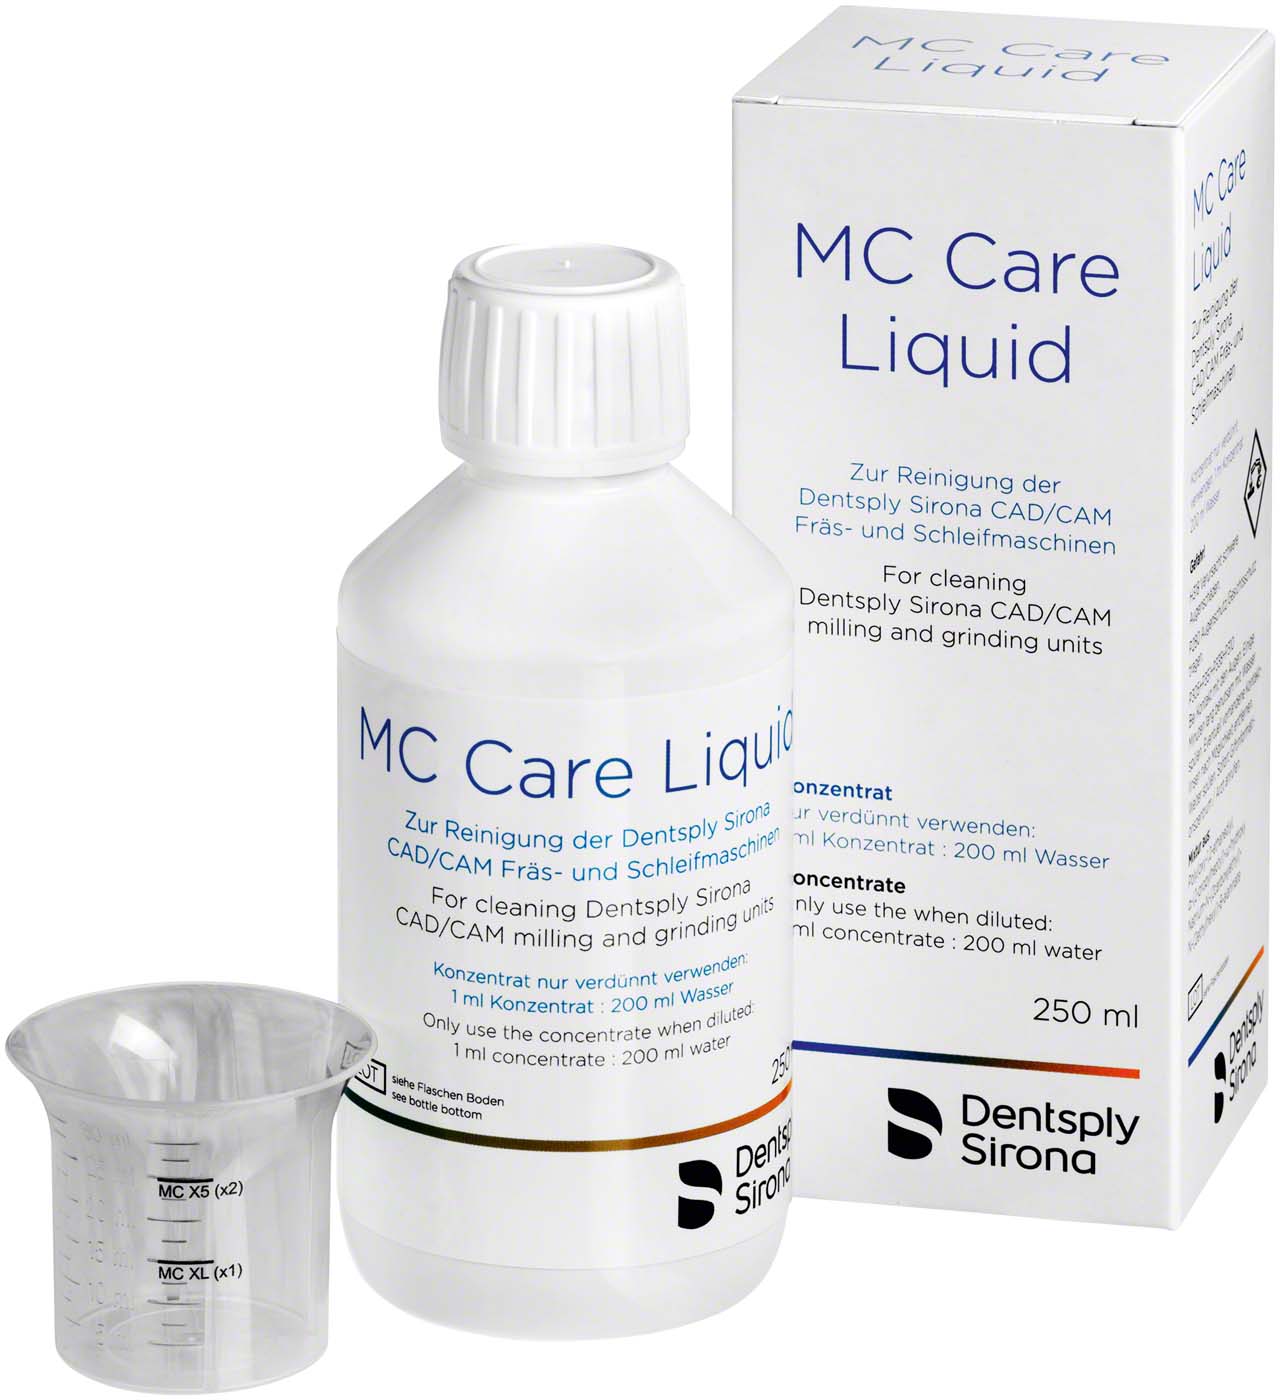 MC Care Liquid Dentsply Sirona